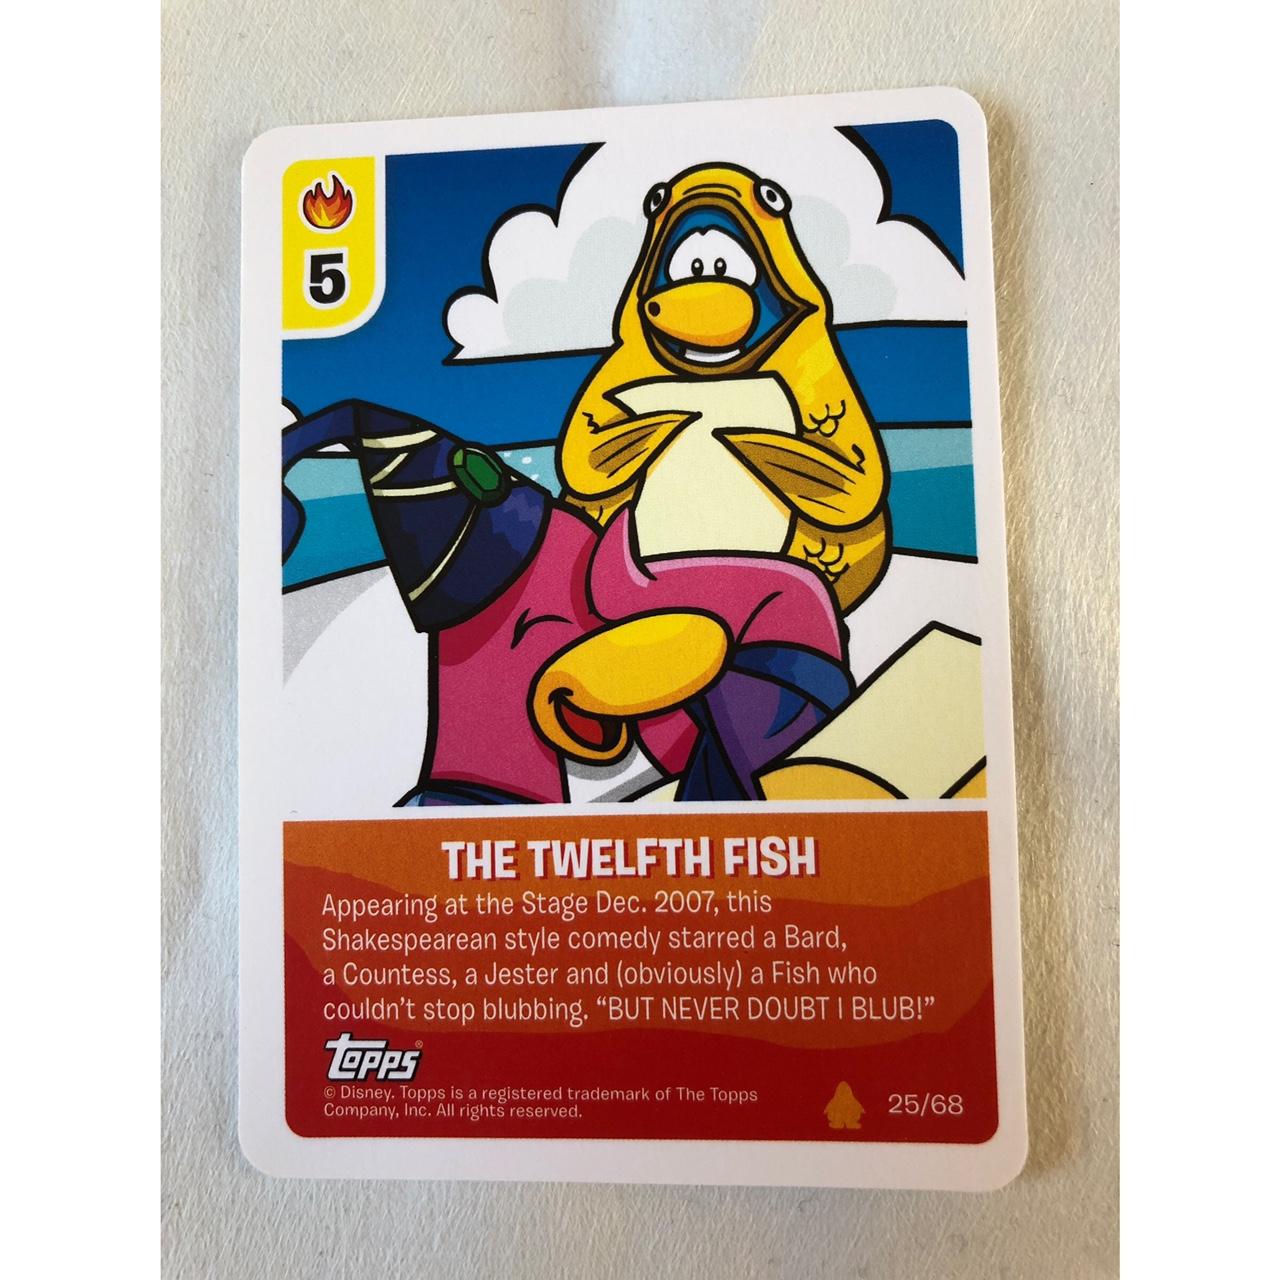 Club Penguin Card-Jitsu Trading Cards - Crispy Boy 